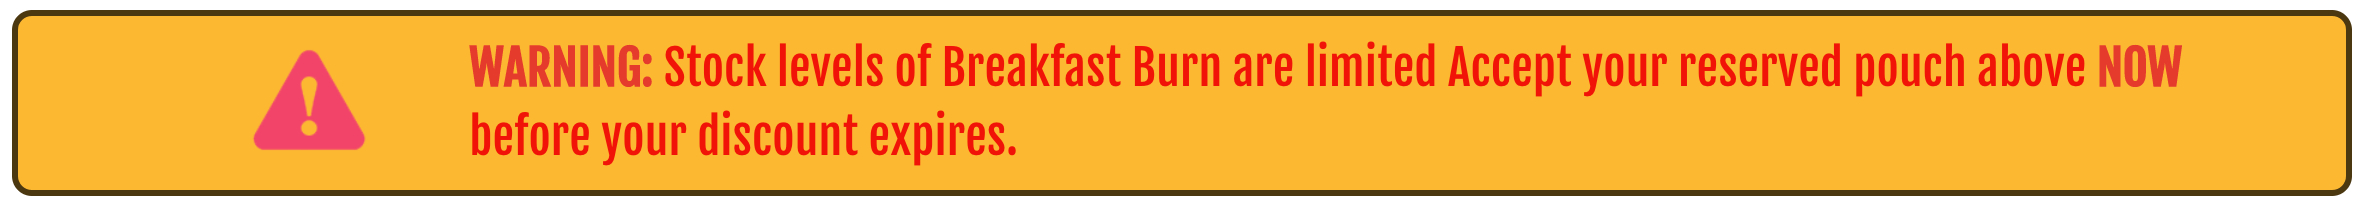 Breakfast Burn - WARNING